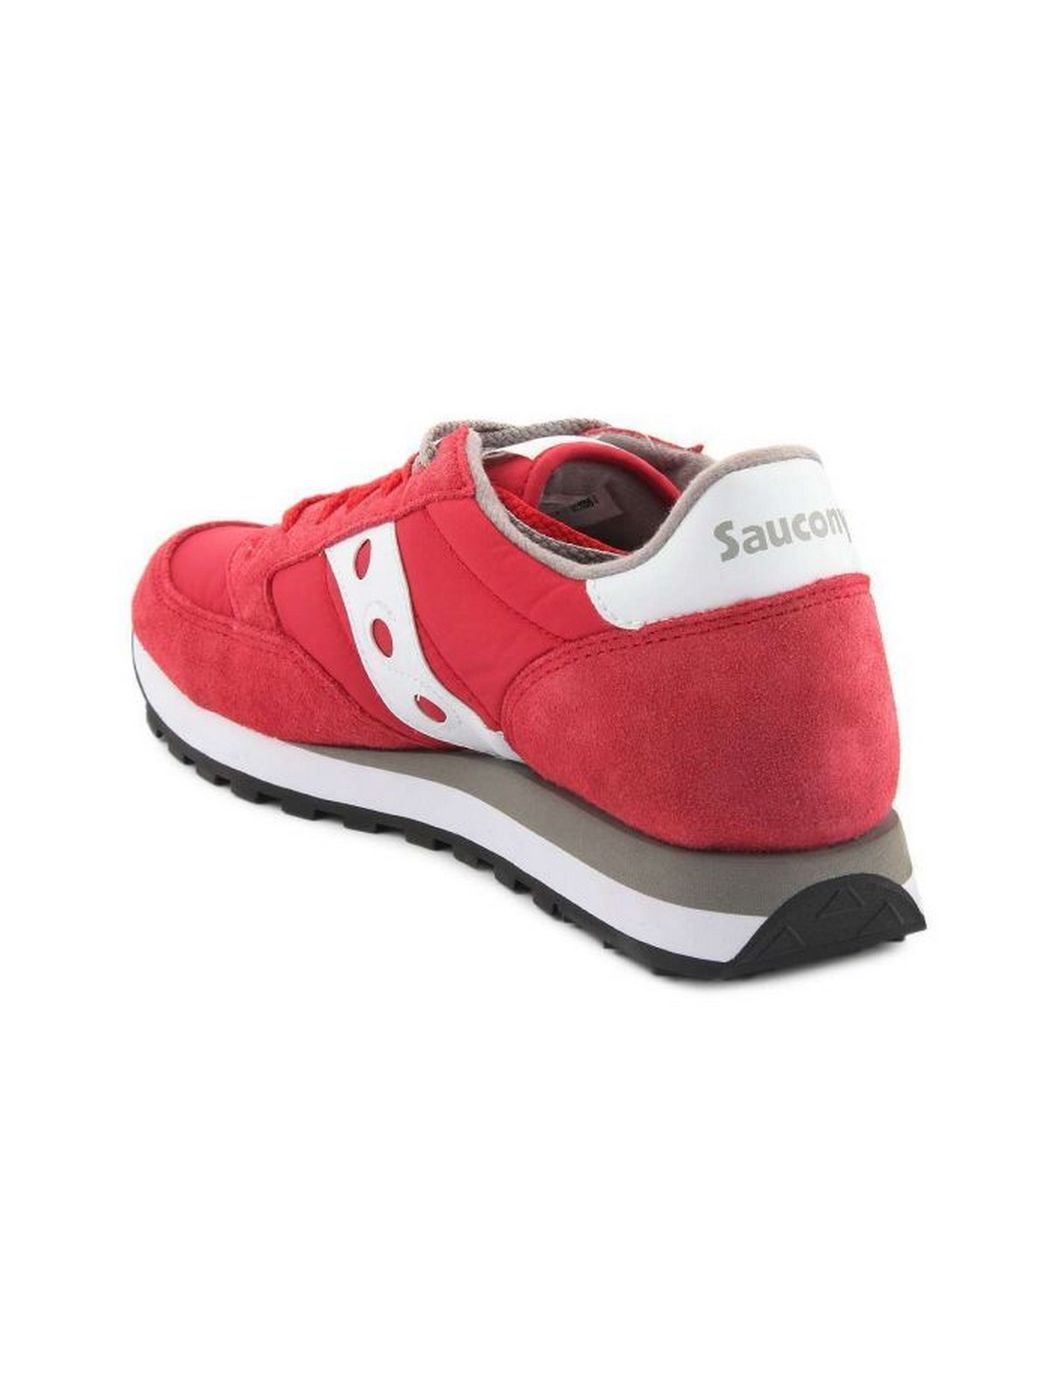 SAUCONY Sneaker Unisex adulto Jazz original S2044-311 Rosso